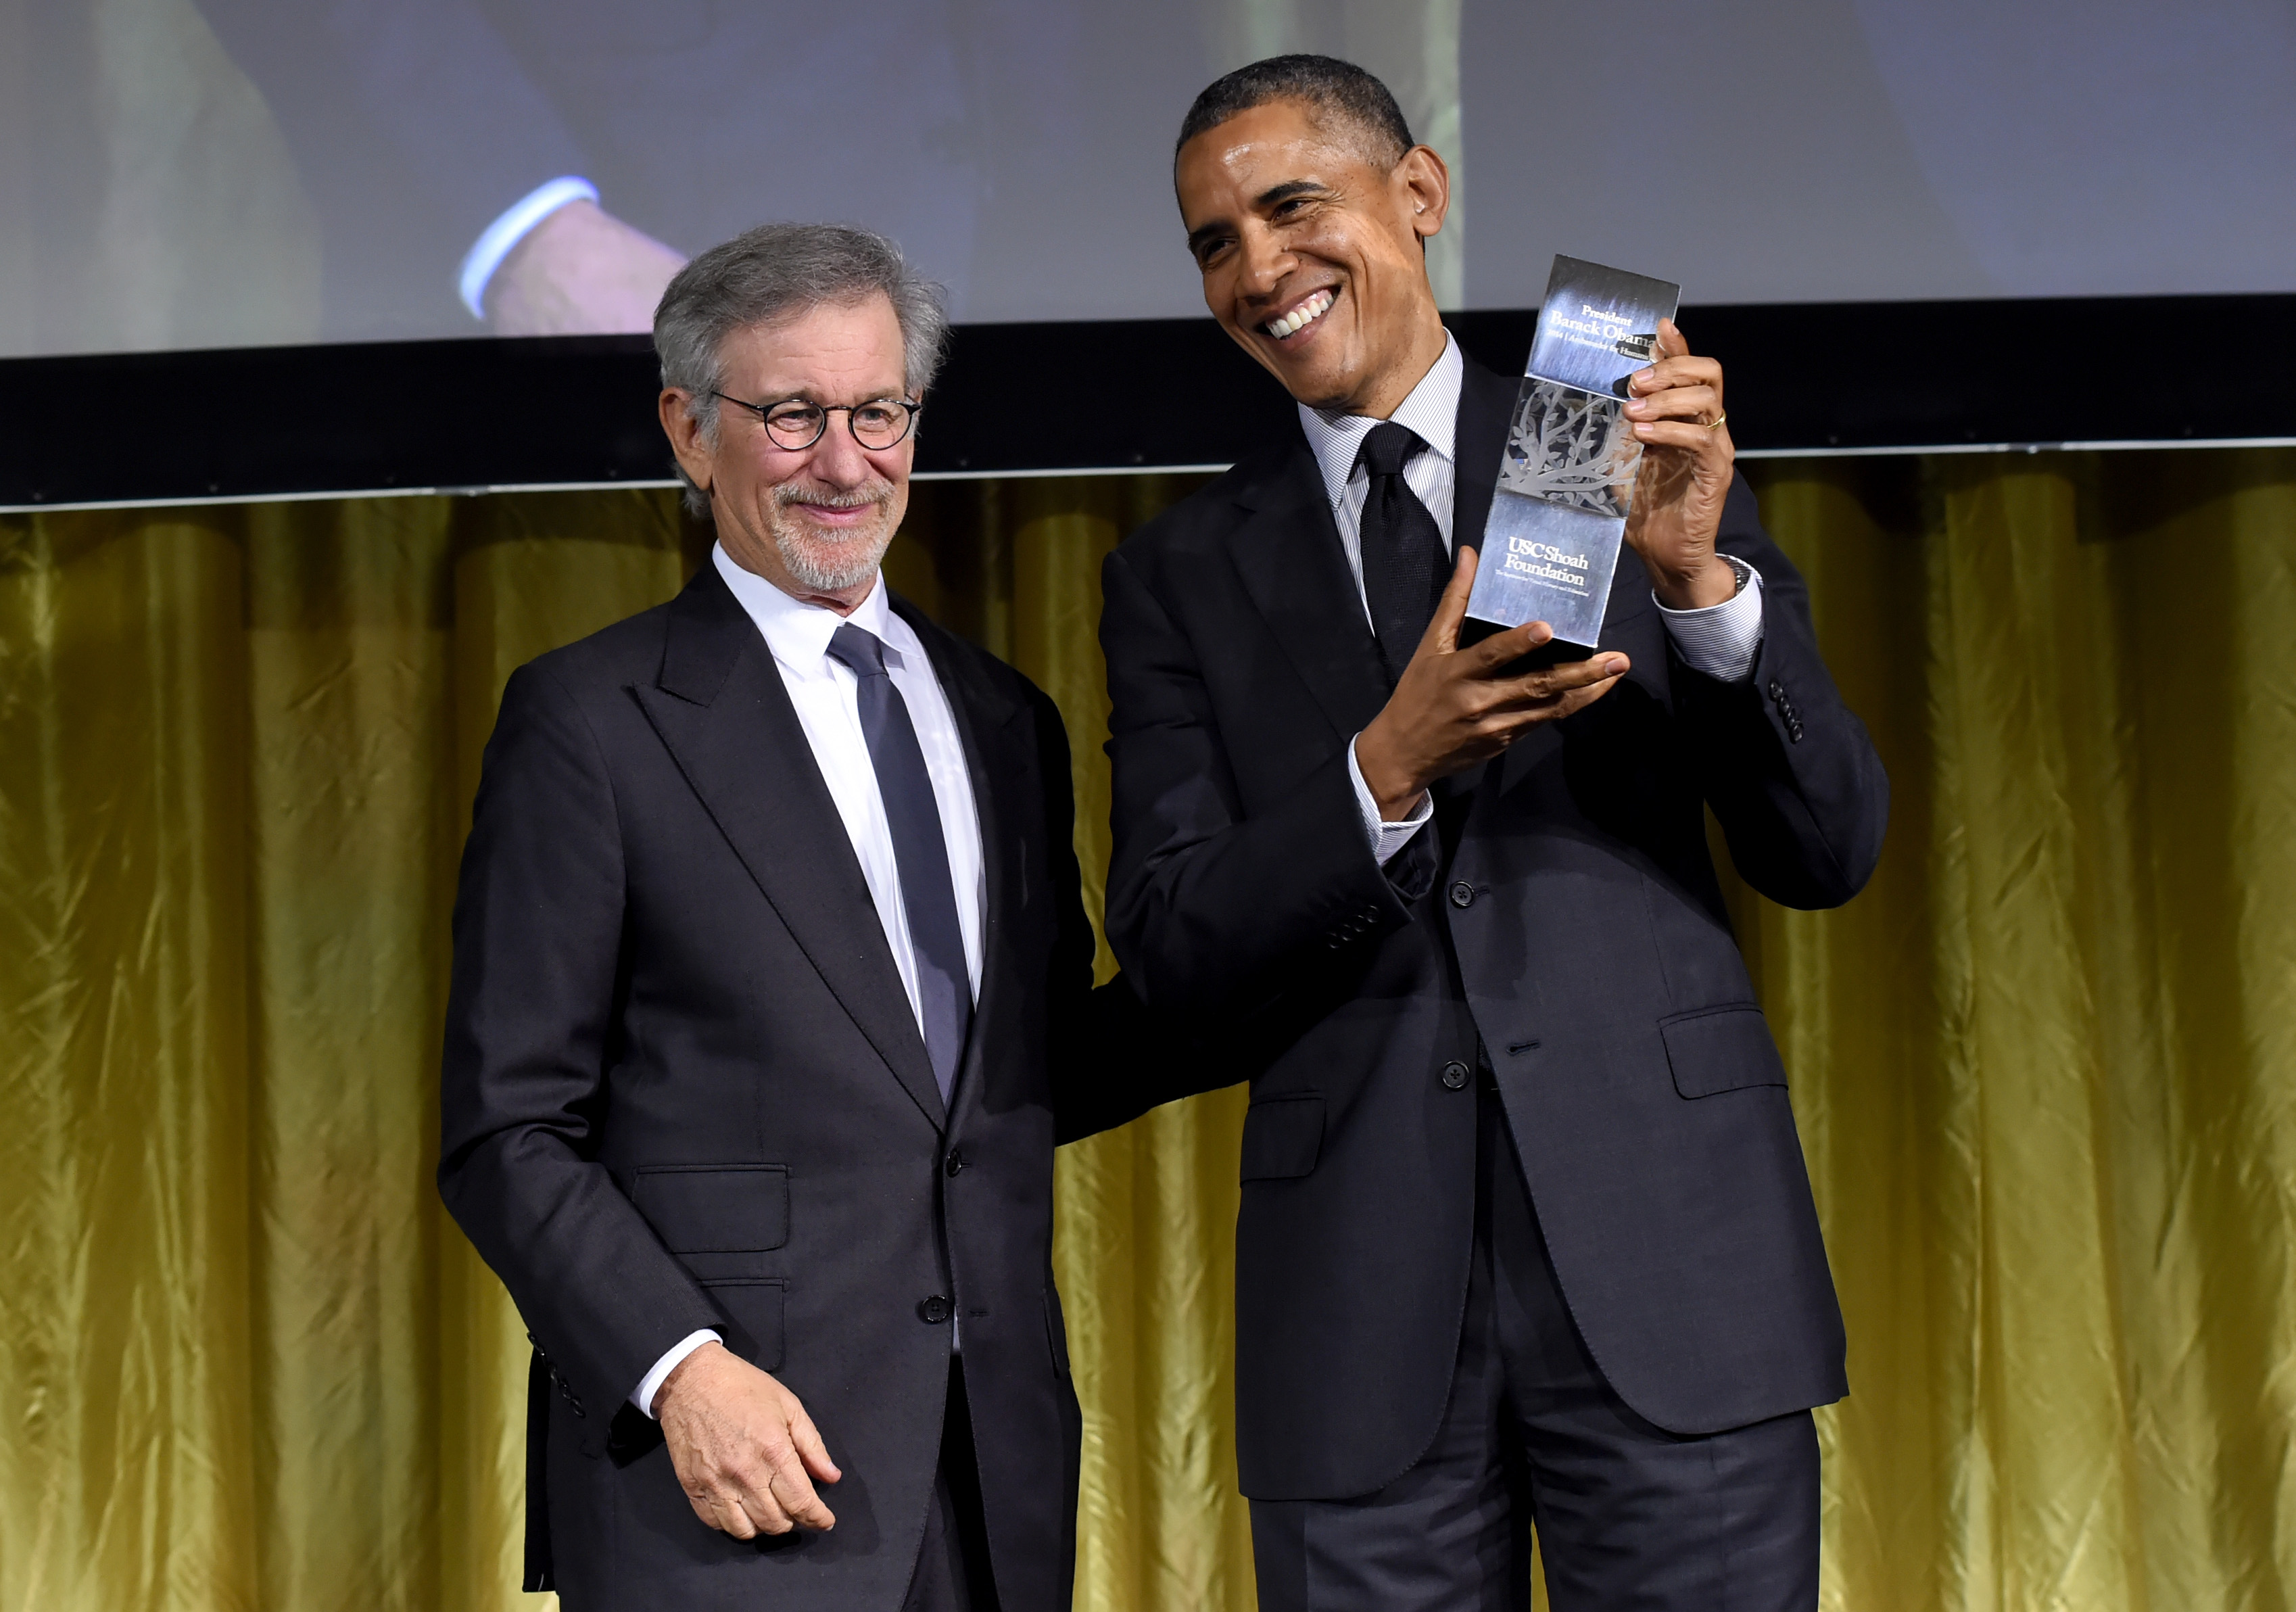 Steven Spielberg and President Barack Obama